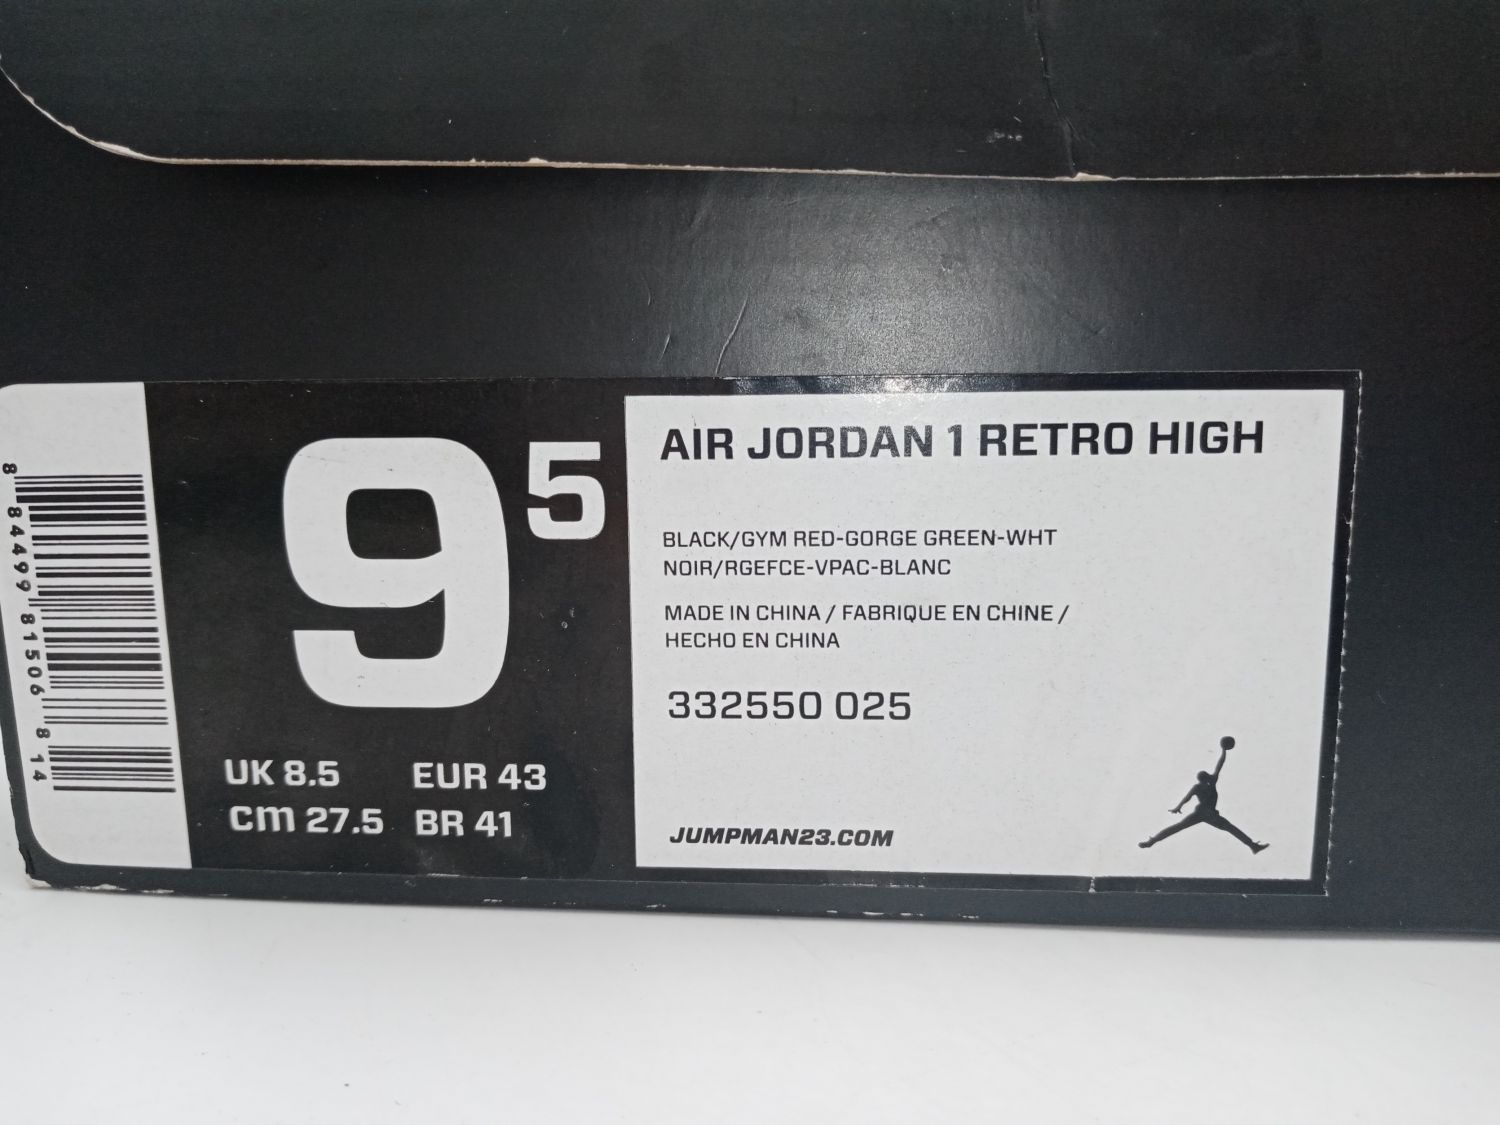 Air Jordan 1 Retro High 'Gucci' - Air Jordan - 332550 025 - black